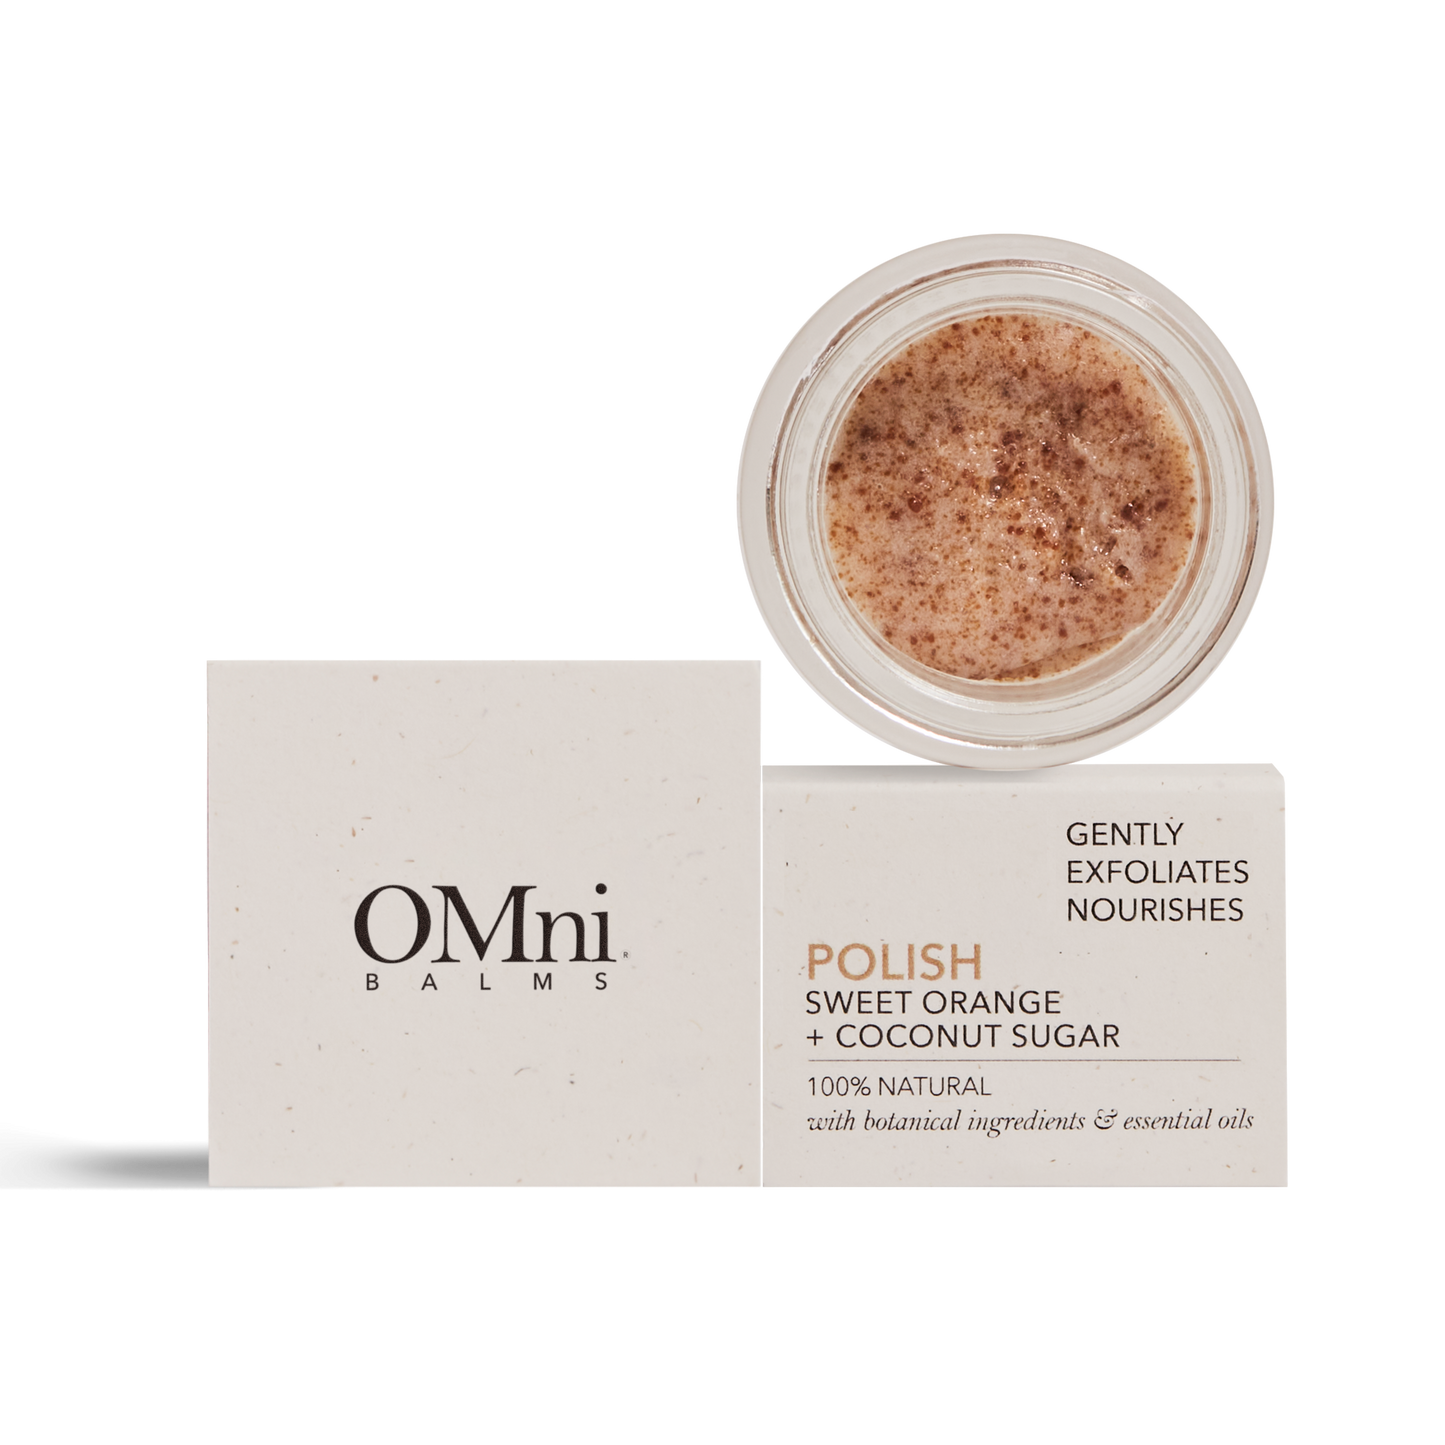 OMni Polish natural multi-use balm gently exfoliates dry lips and skin